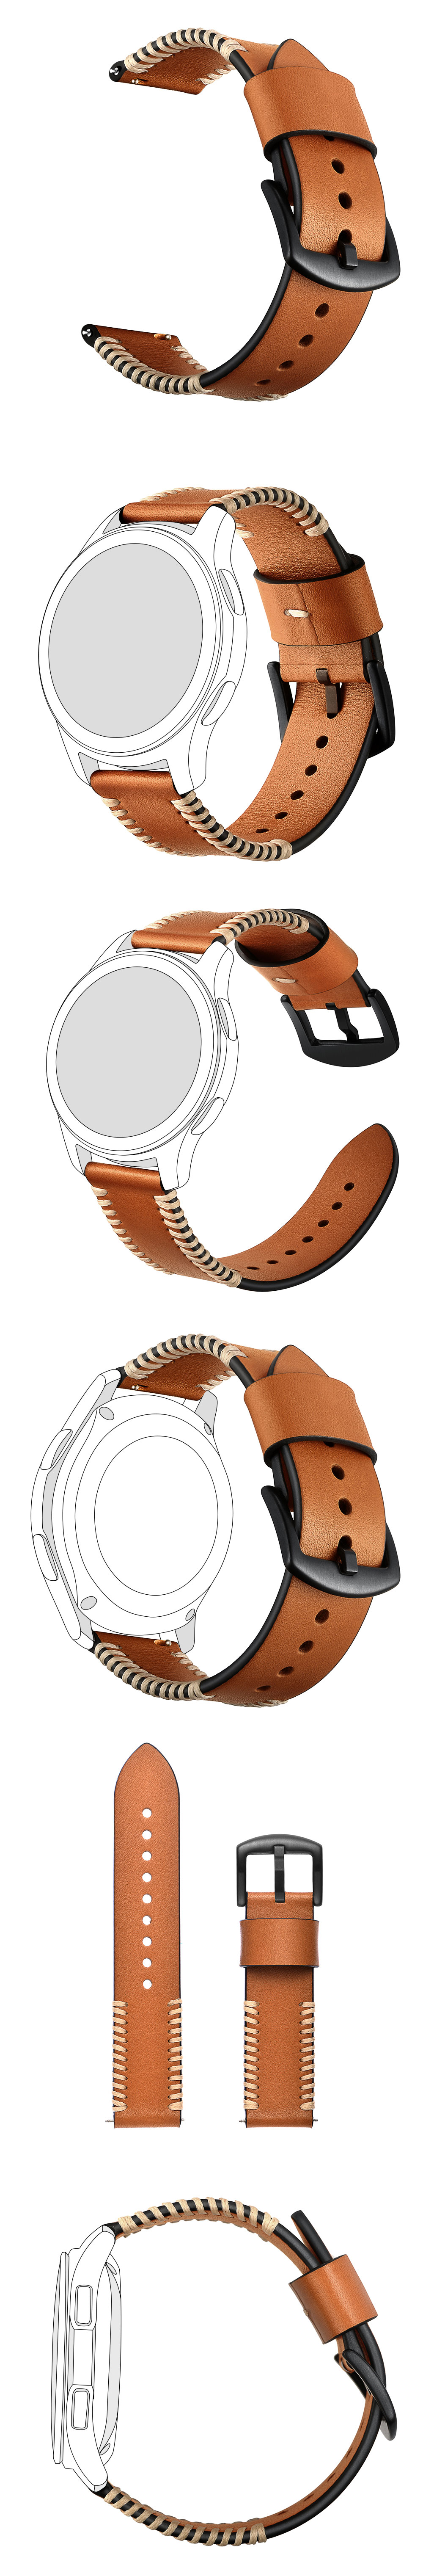 General-182022mm-Watch-Band-Stitches-Genuine-Leather-Universal-Watch-Strap-1442903-2